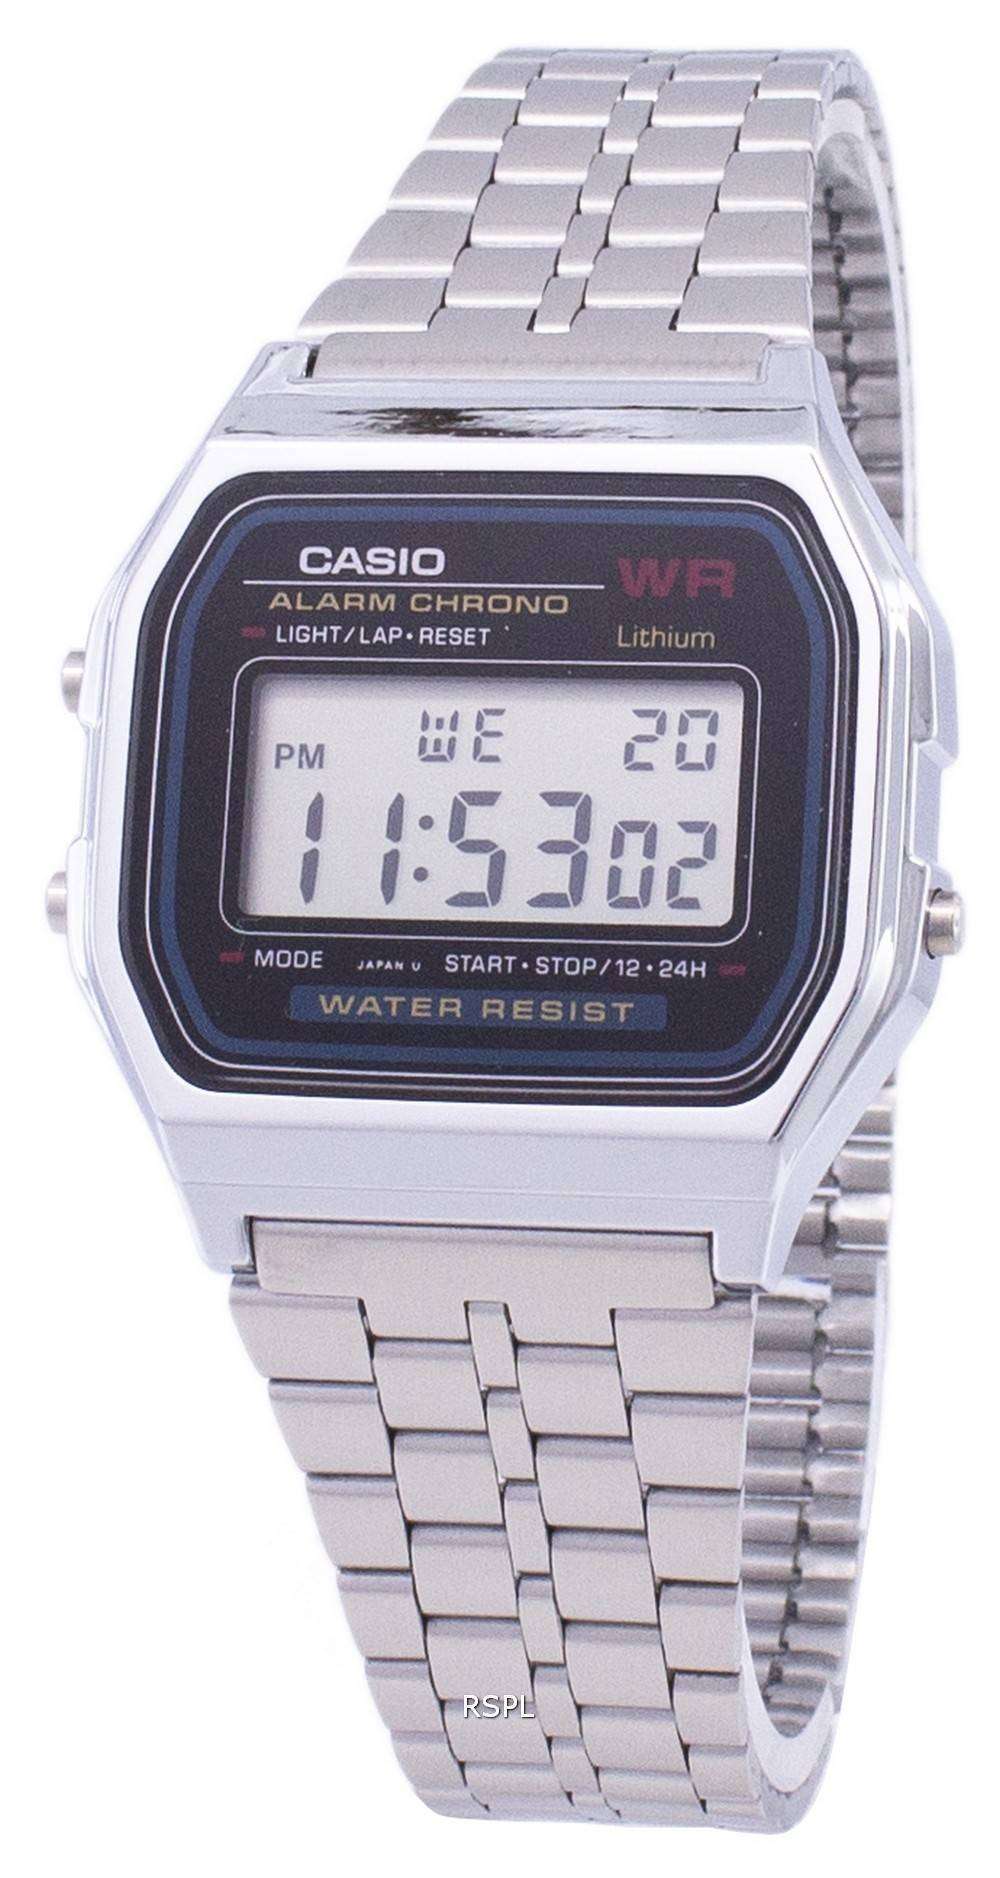 Casio Digital Alarm Chrono Stainless Steel A159wa N1df A159wa N1 Men S Watch Citywatches Co Uk